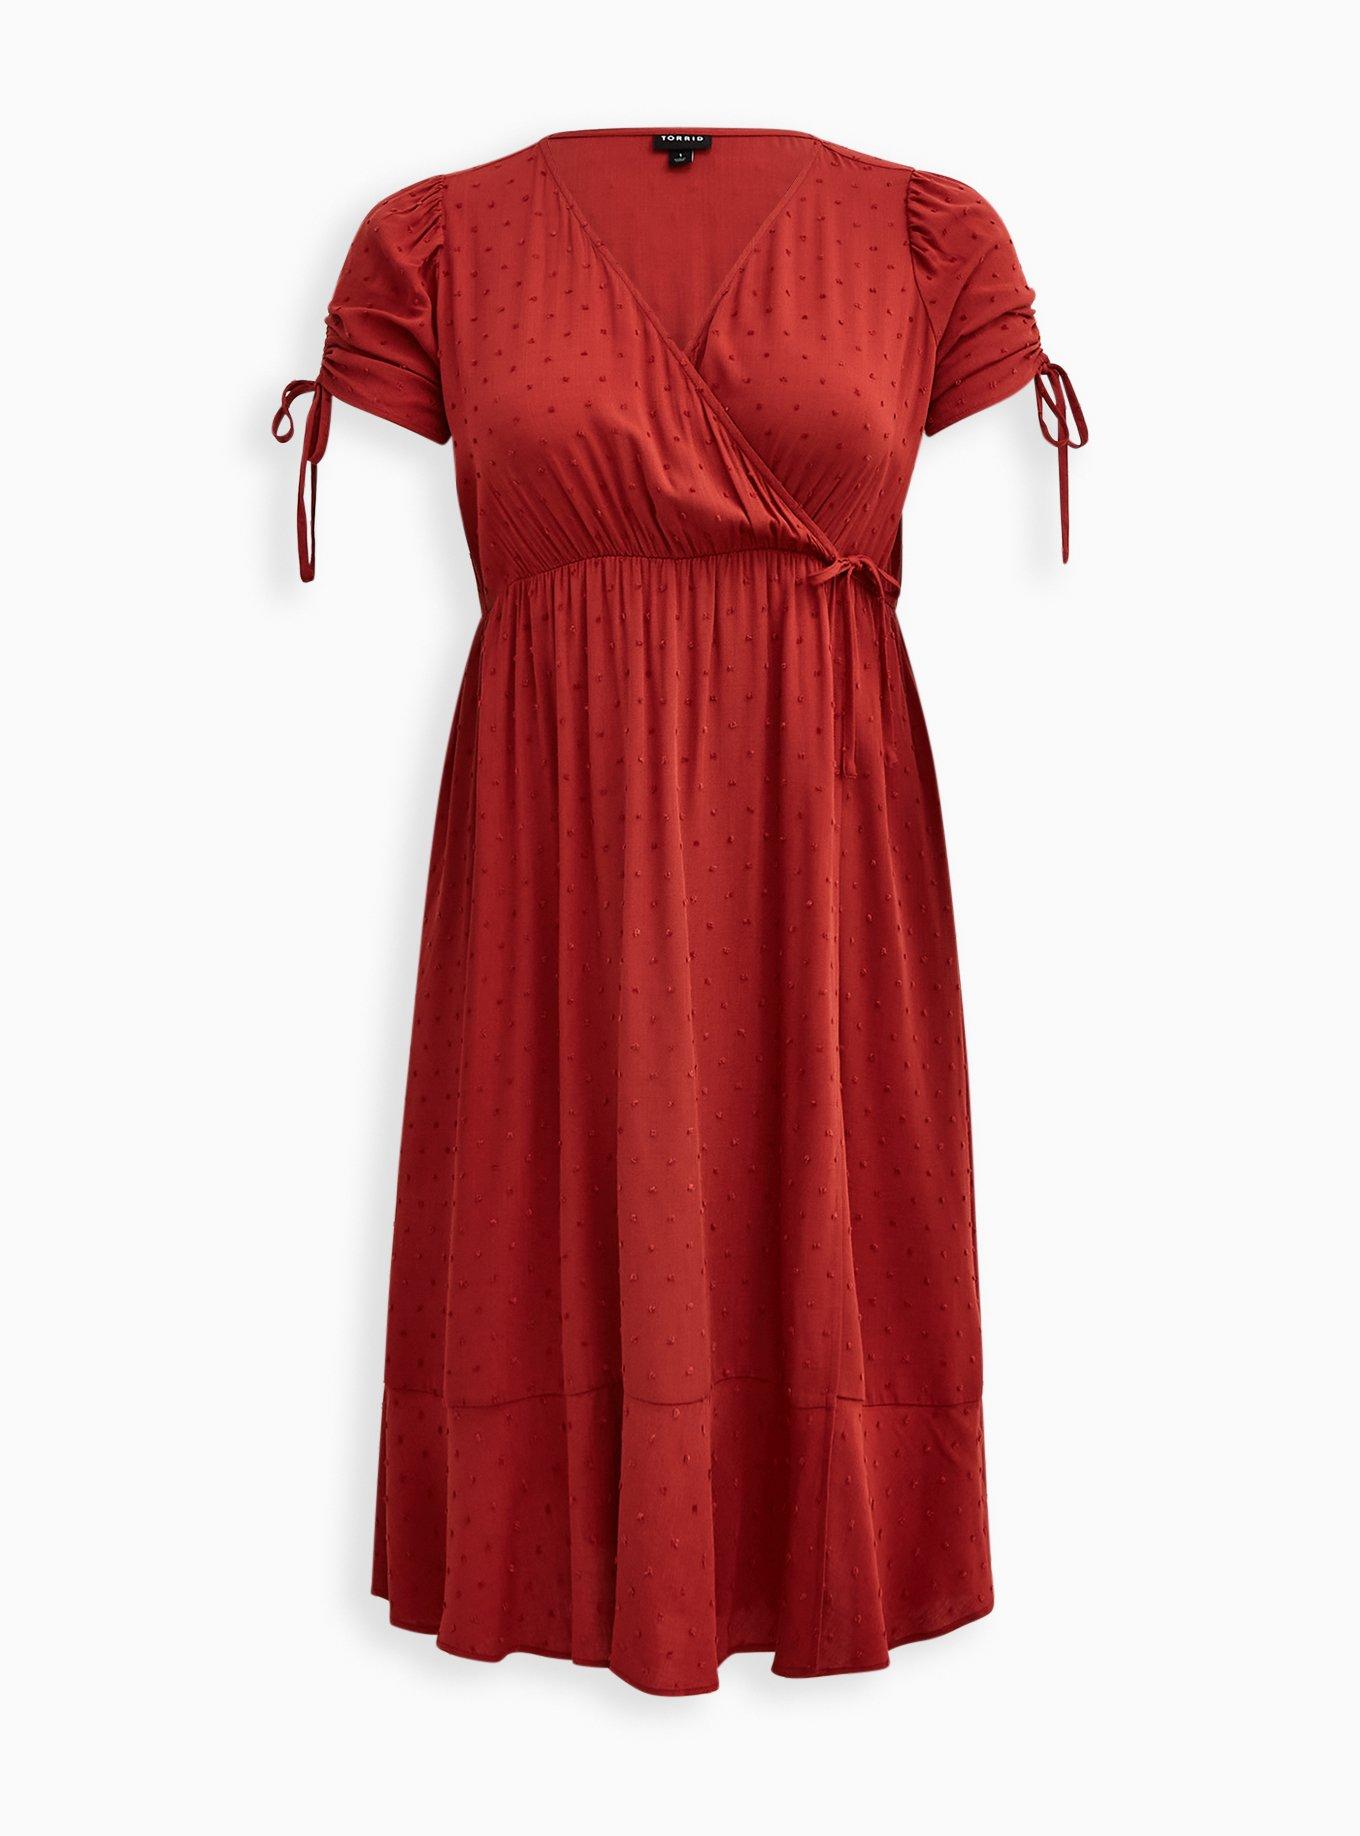 TORRID 40530000 Midi Flora Clip Dot Lace Up Smocked Dress 3 (22 - 24) 3X  Red